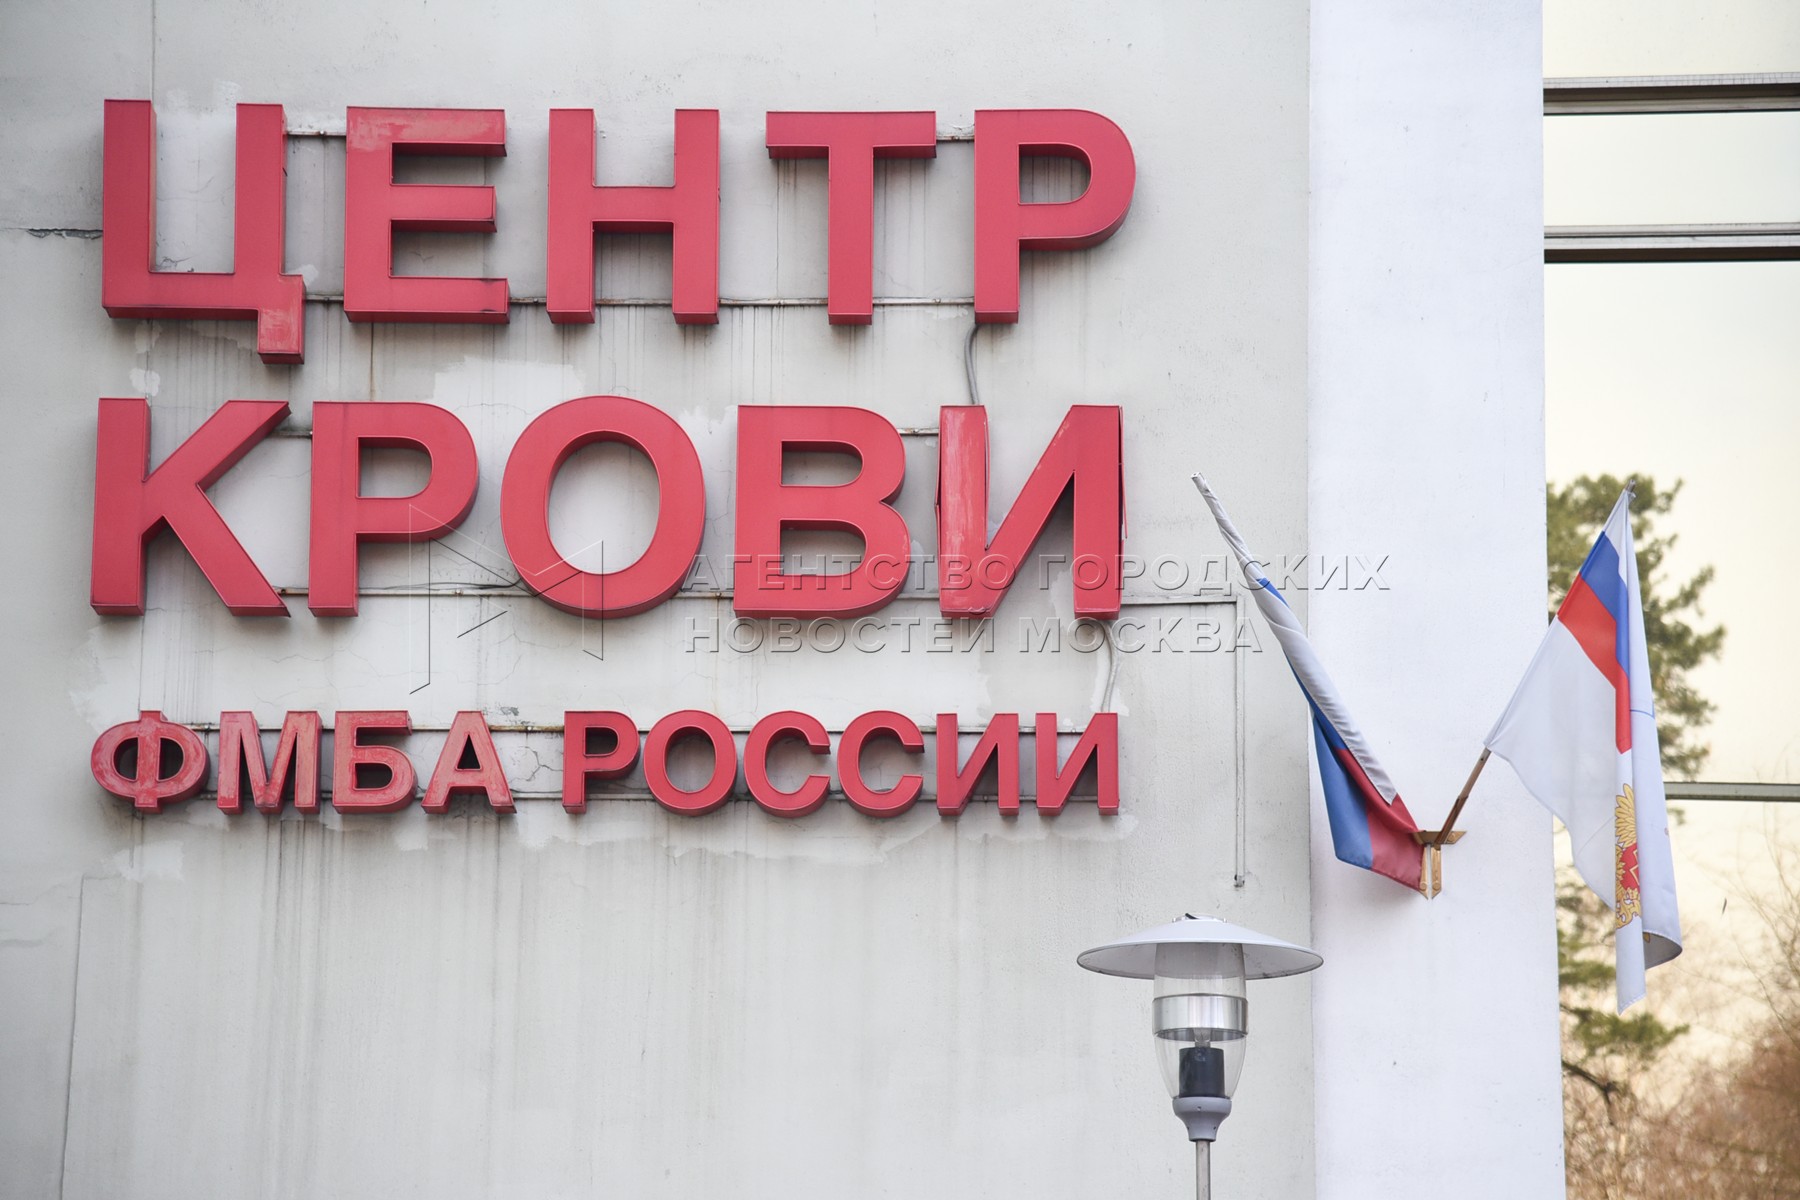 Центр крови ФМБА России логотип.